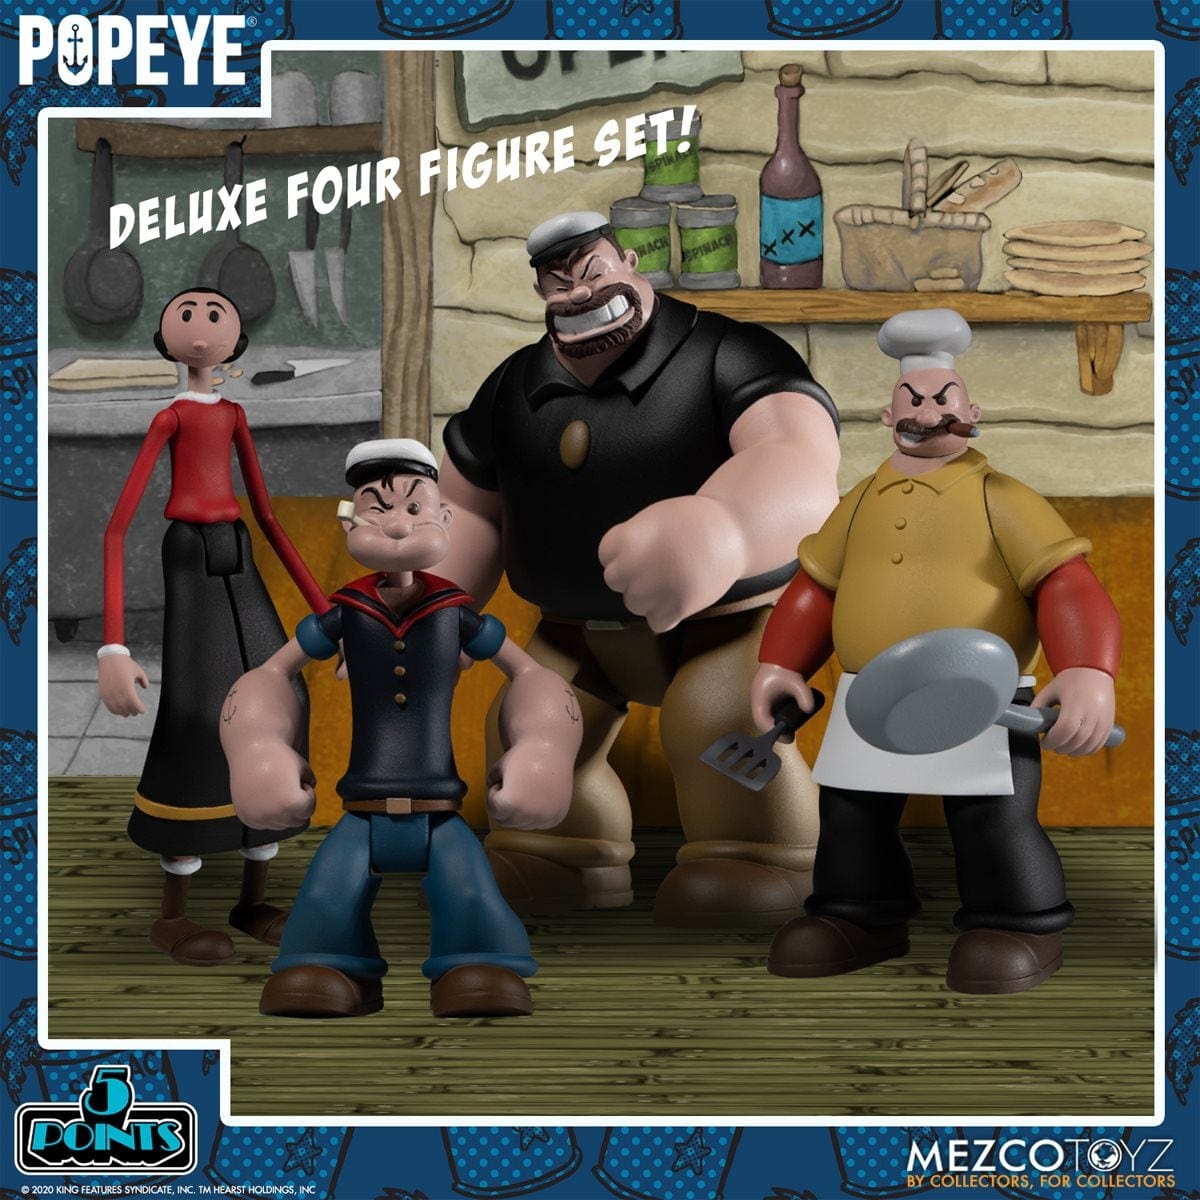 Popeye 5 Points Deluxe Box Set - Pop-O-Loco - Mezco